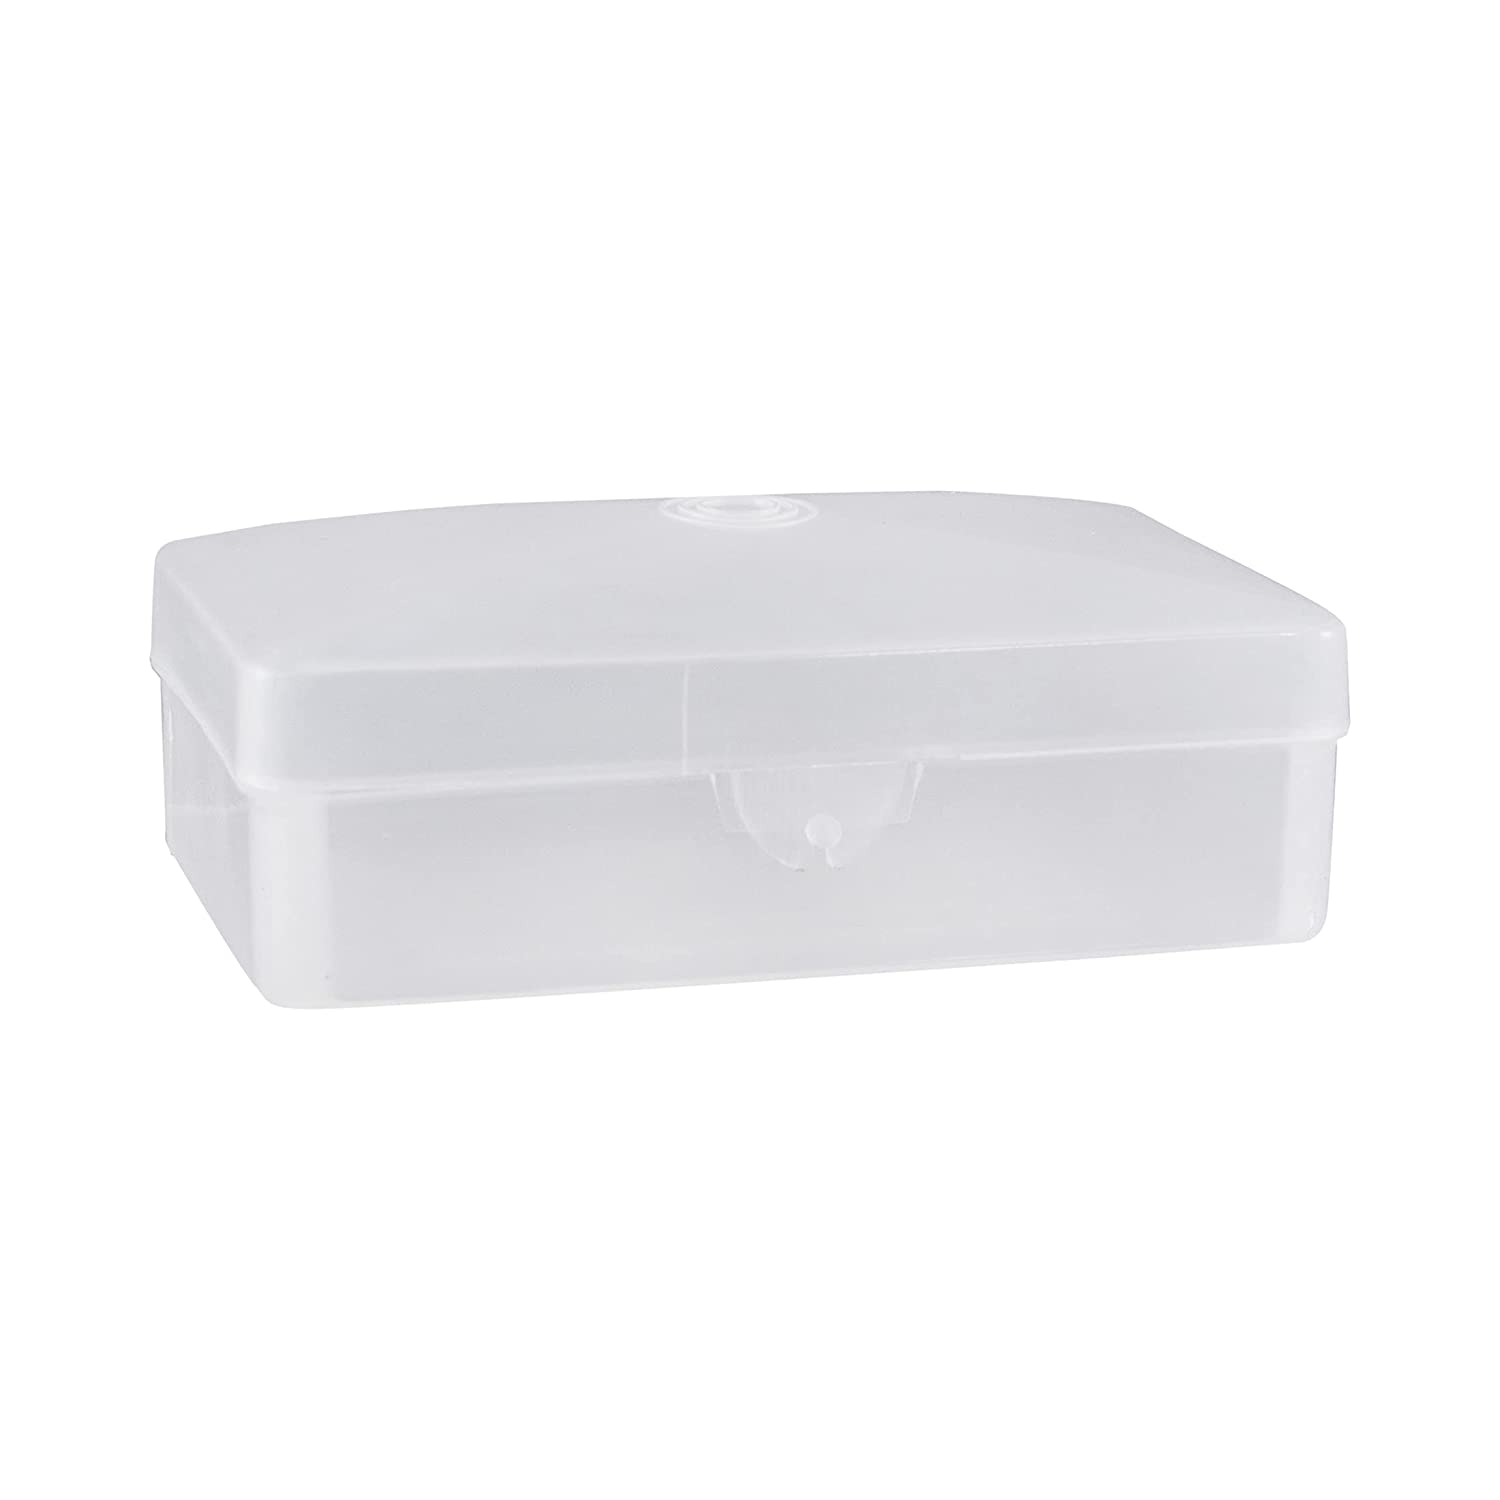 Dukal SB01C Dawn Mist Translucent Plastic Soap Box 2 1/2" x 3.14" (Pack of 100)…